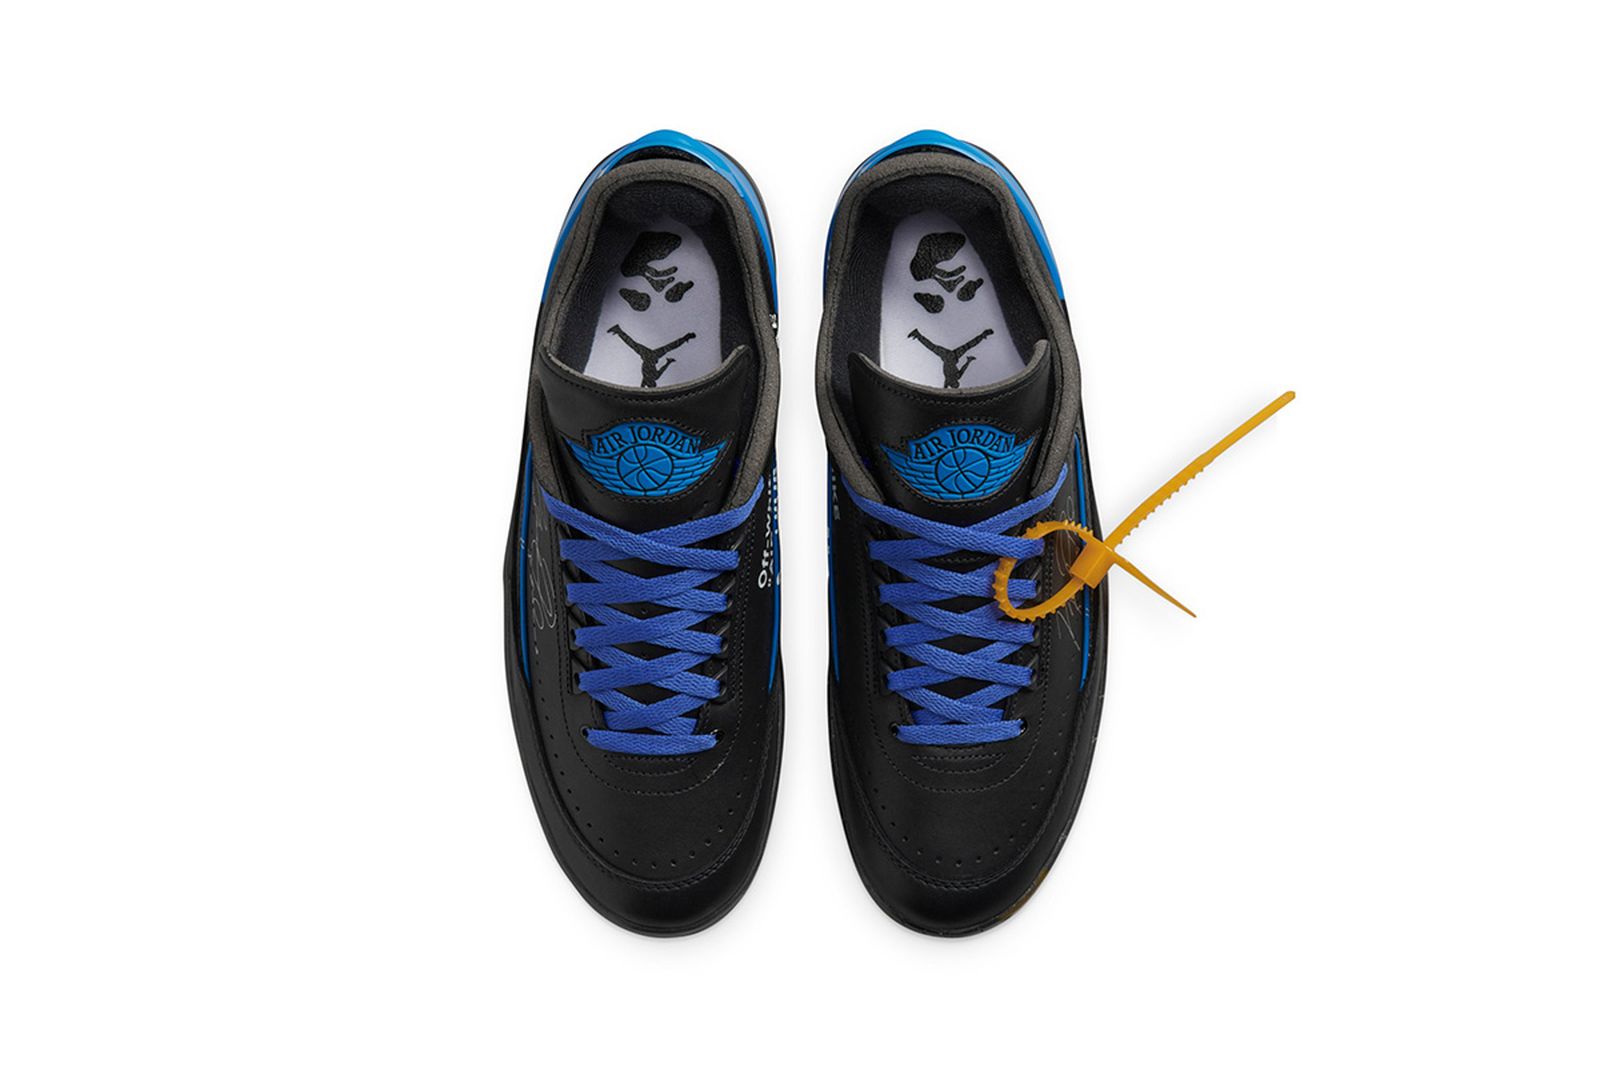 Off-White™ x off white air jordan 2 Nike Air Jordan 2 Low: Official Release Information